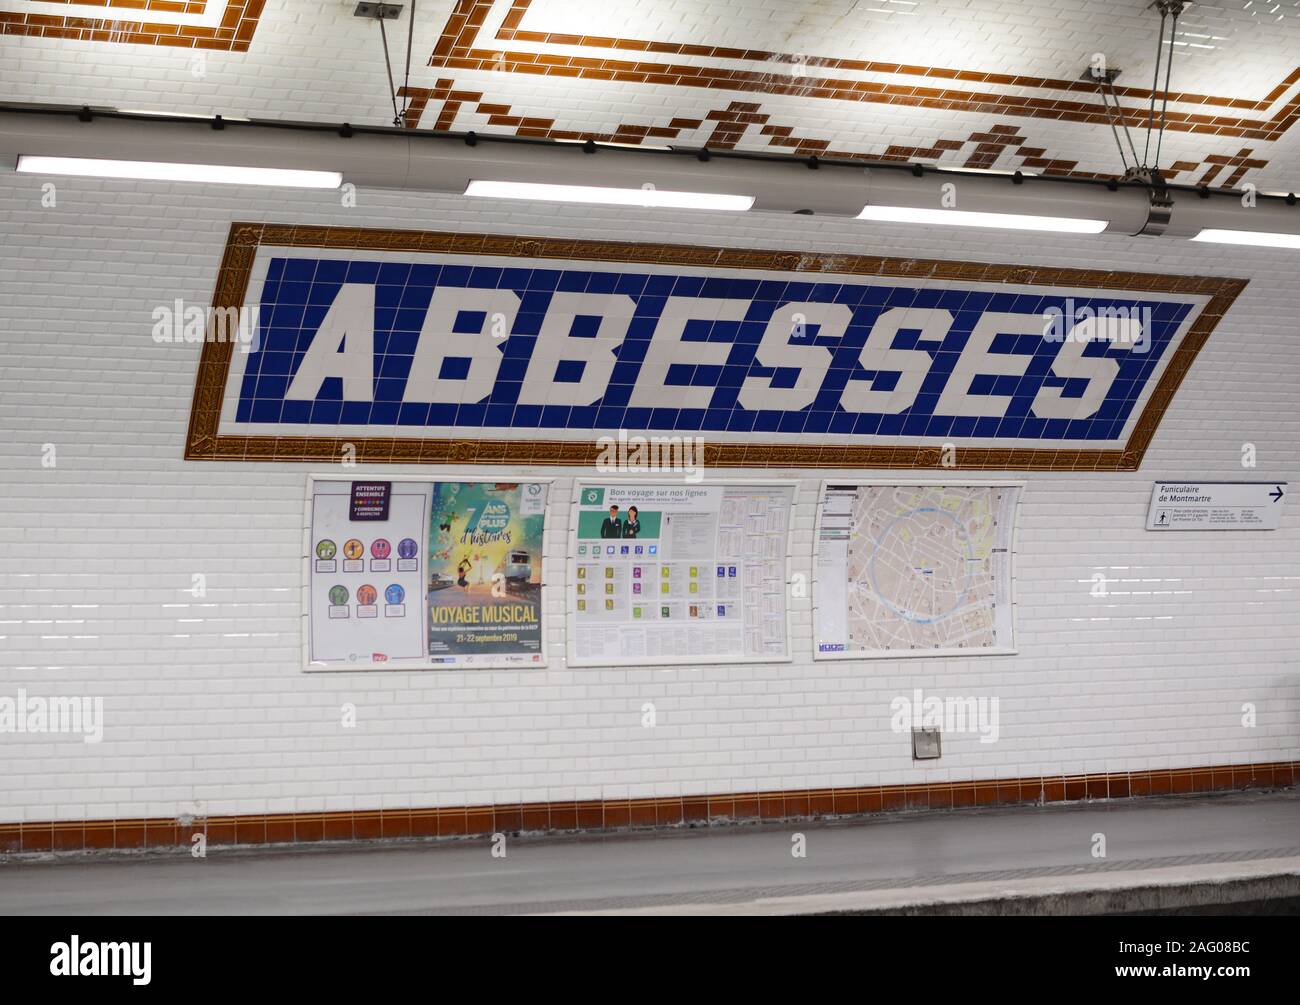 PARIS, FRANCE - SEPTEMBER 16, 2019: Tiled wall of Abbesses metro underground railway station in Montmartre, Paris on September 16, 2019 Stock Photo